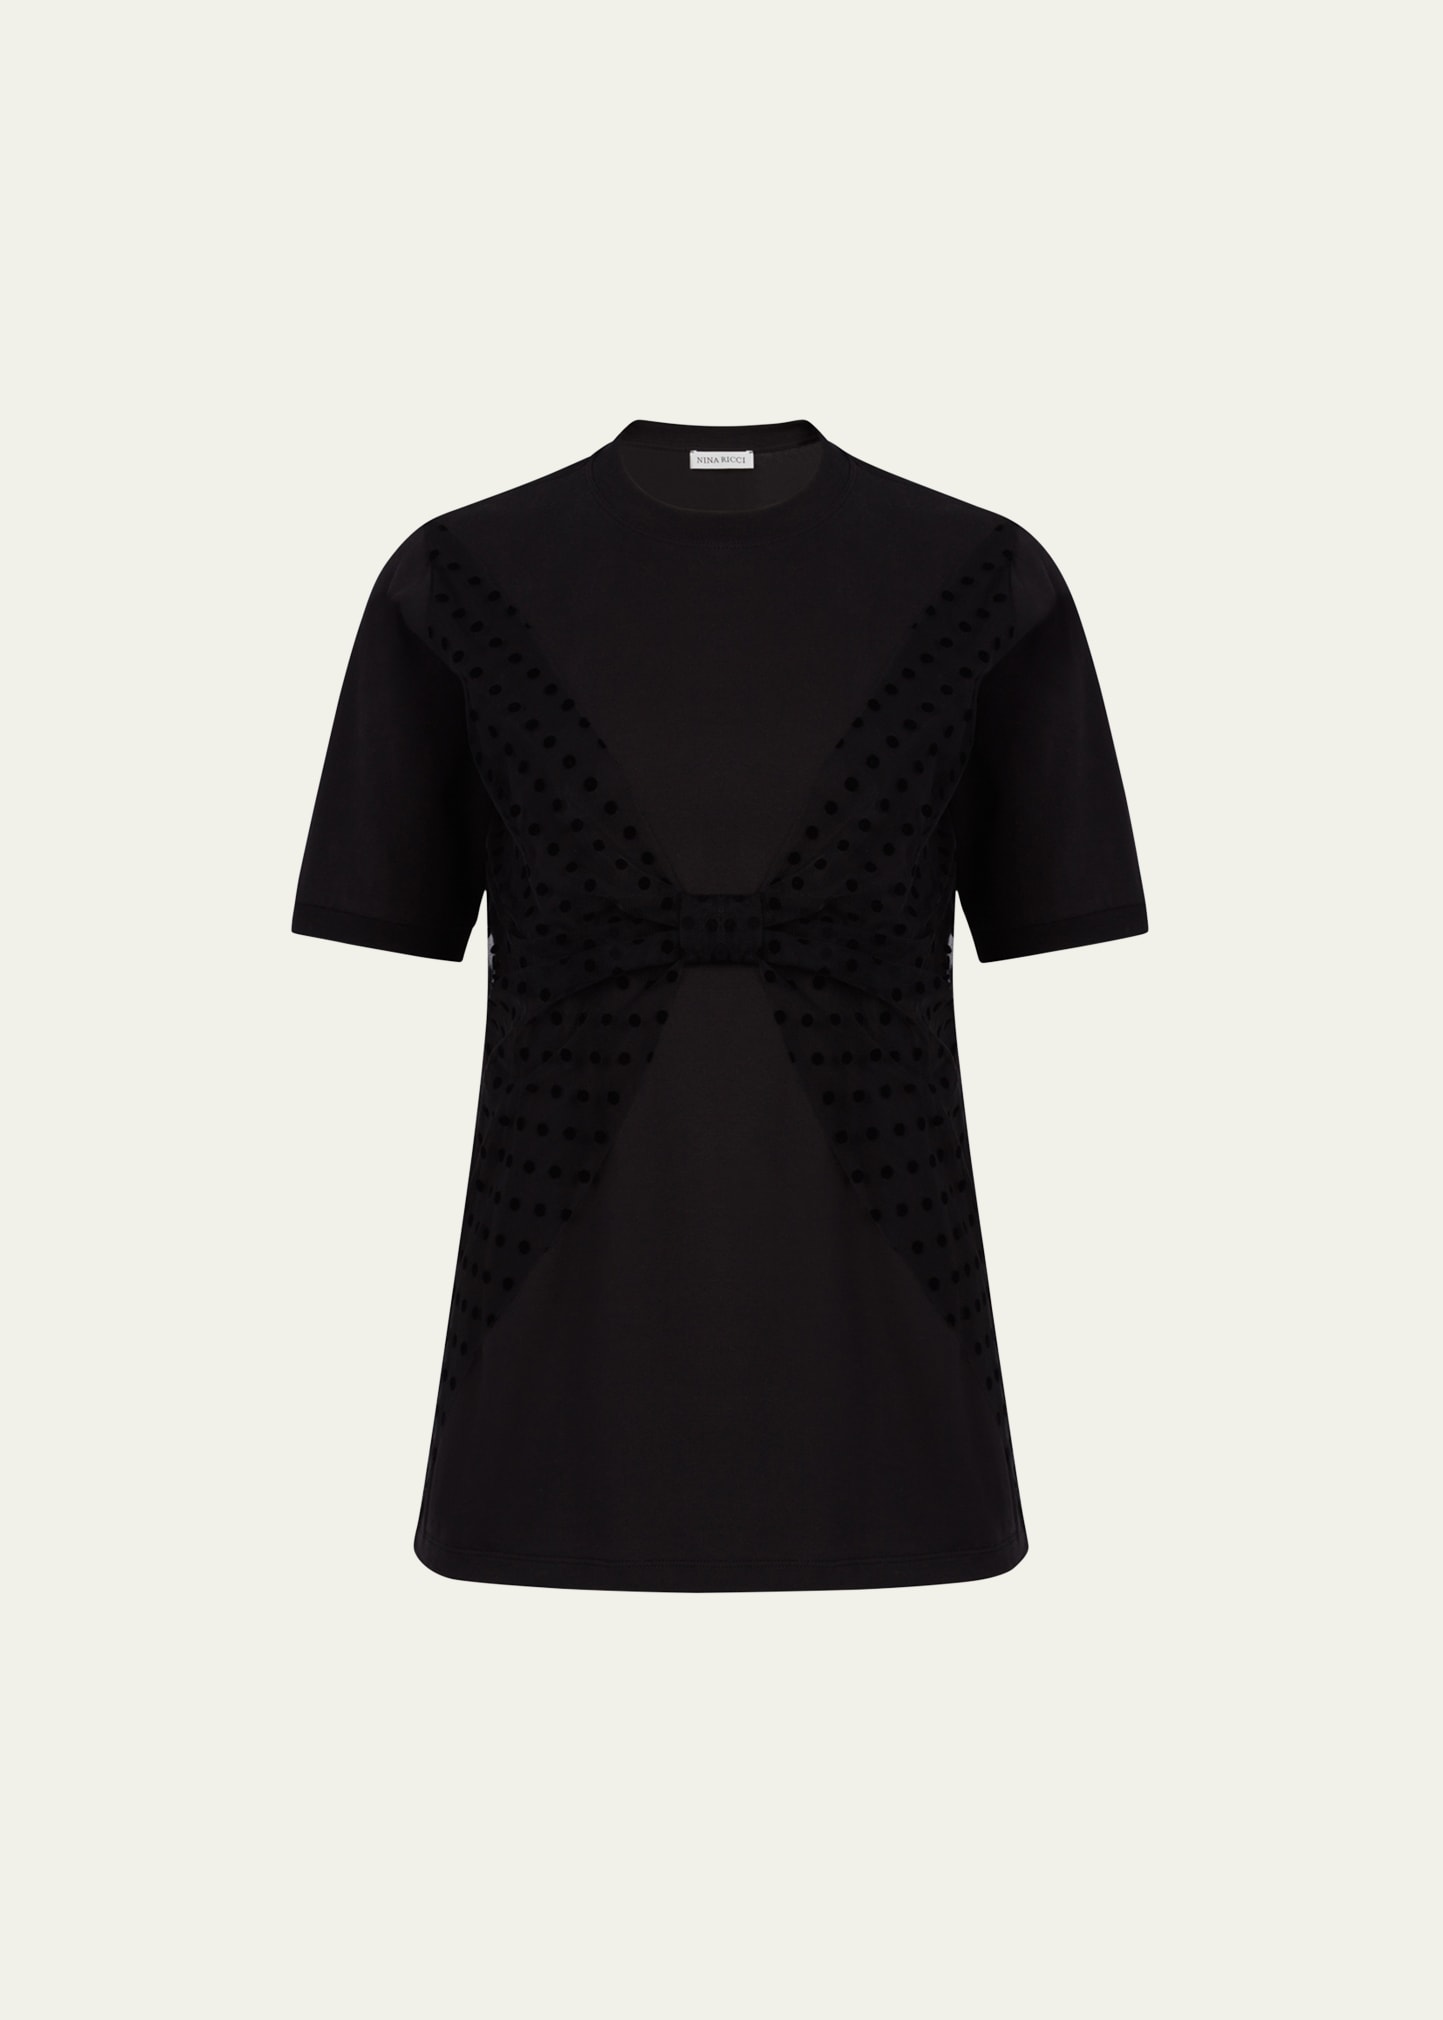 Nina Ricci T-shirt With Polka Dot Bow In U9000